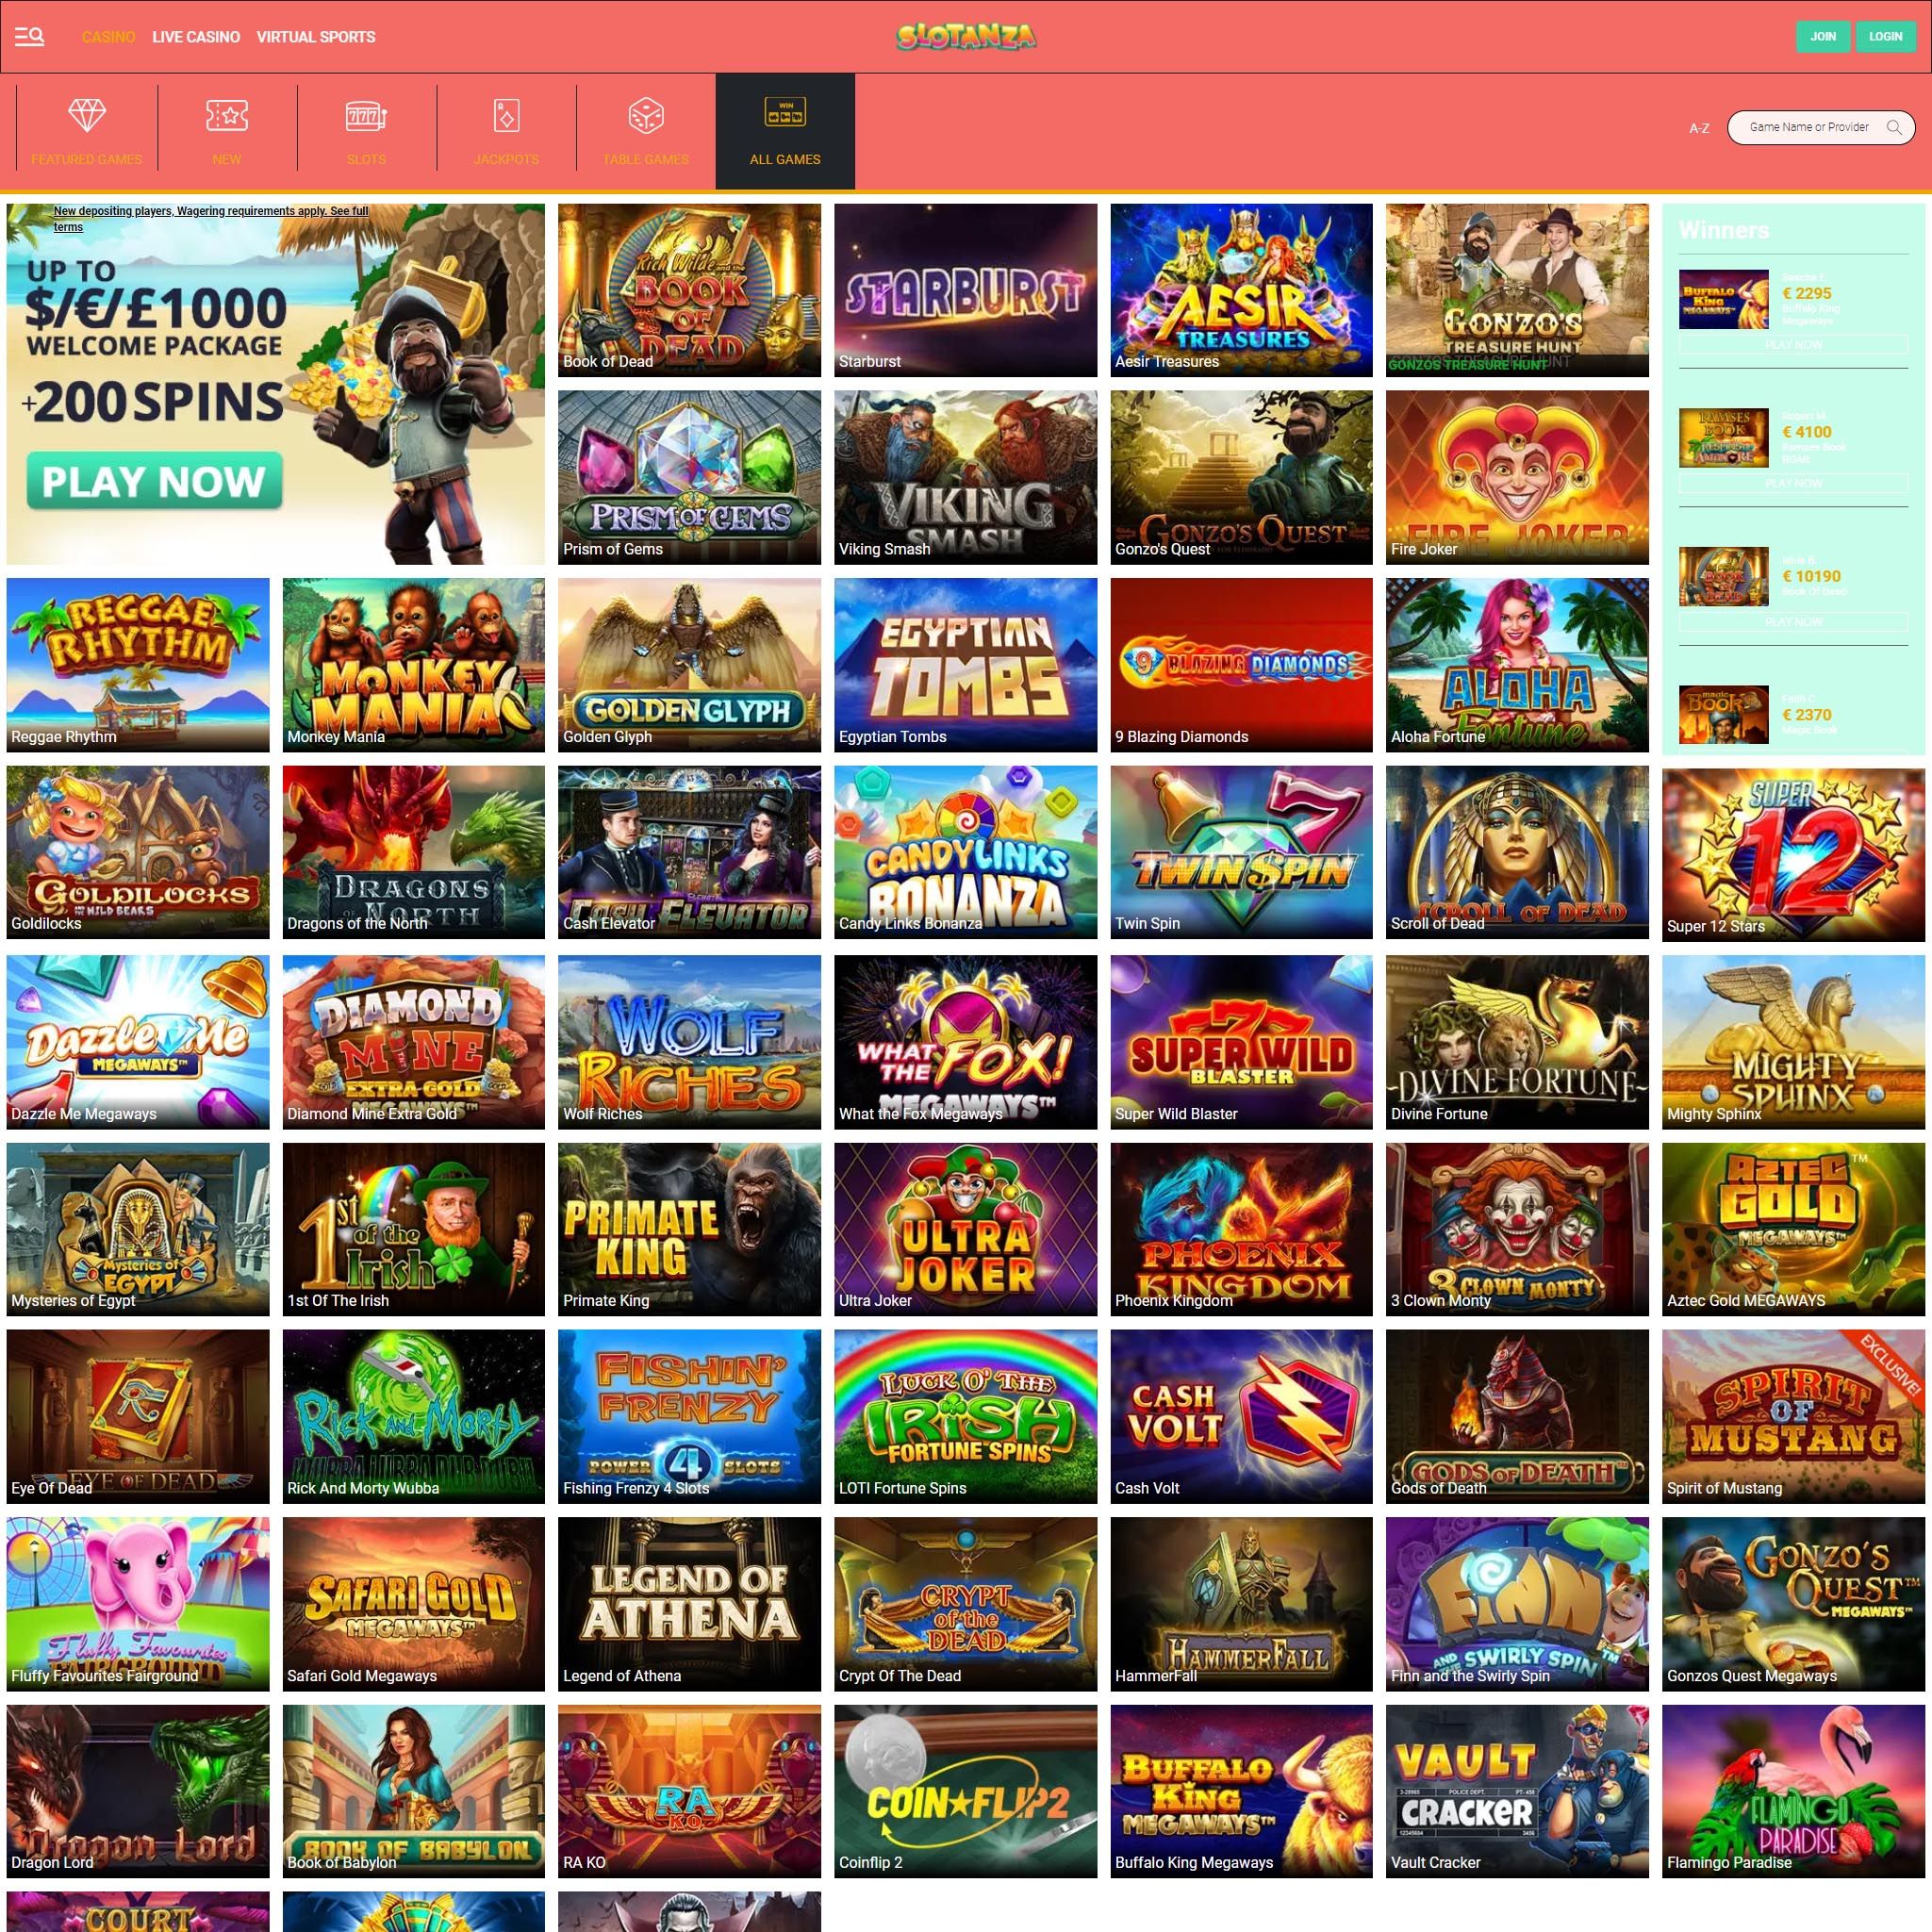 Slotanza Casino full games catalogue